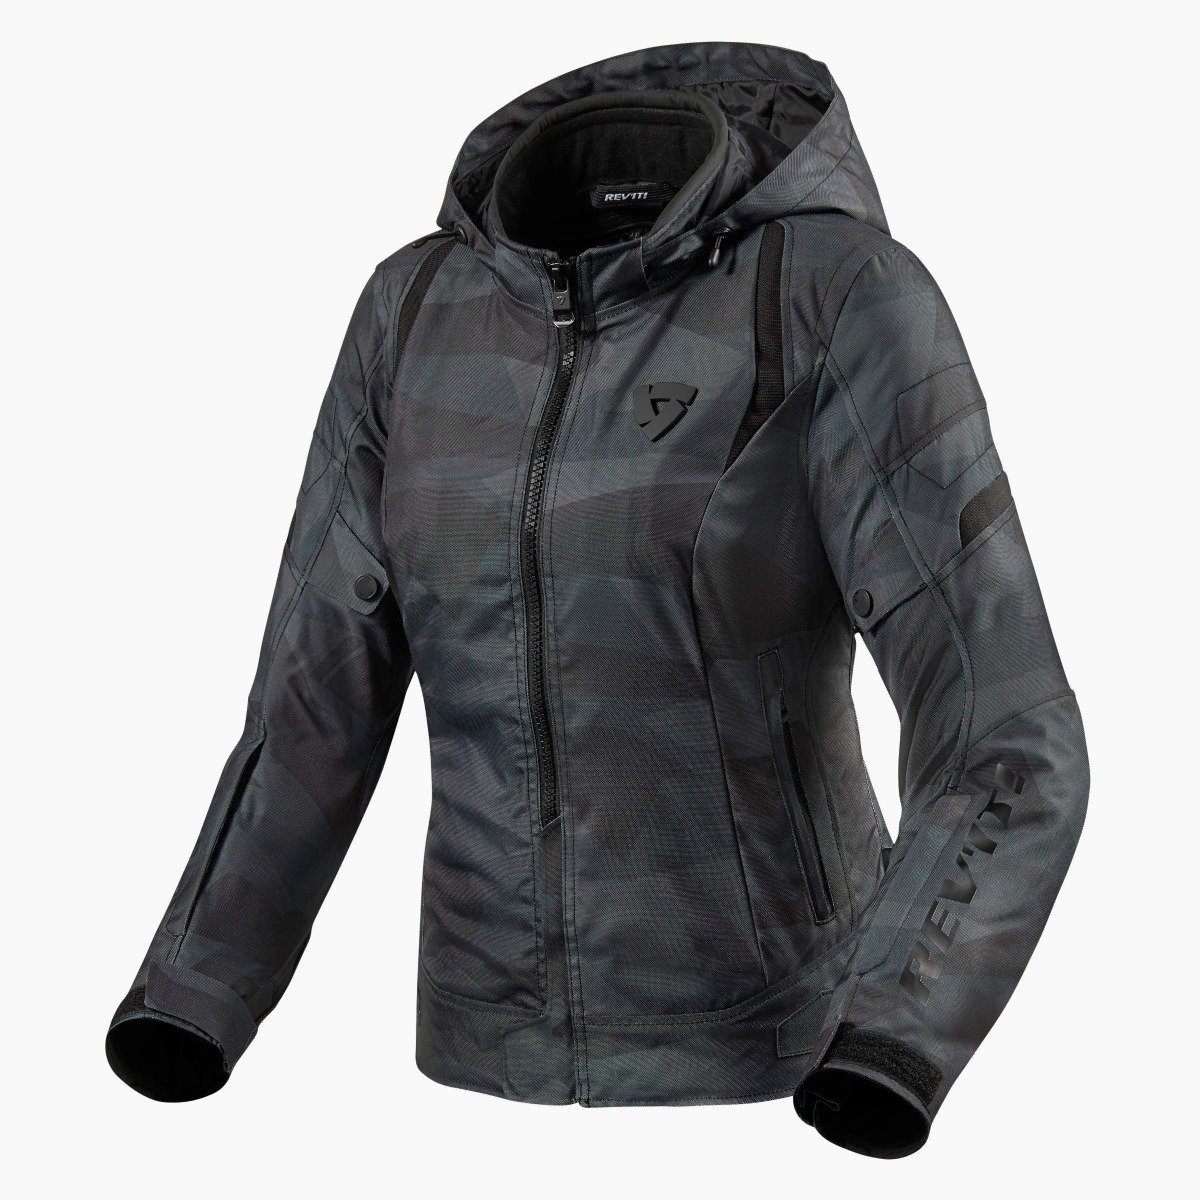 Image of REV'IT! Flare 2 Jacket Lady Camo Black Gray Size 44 EN